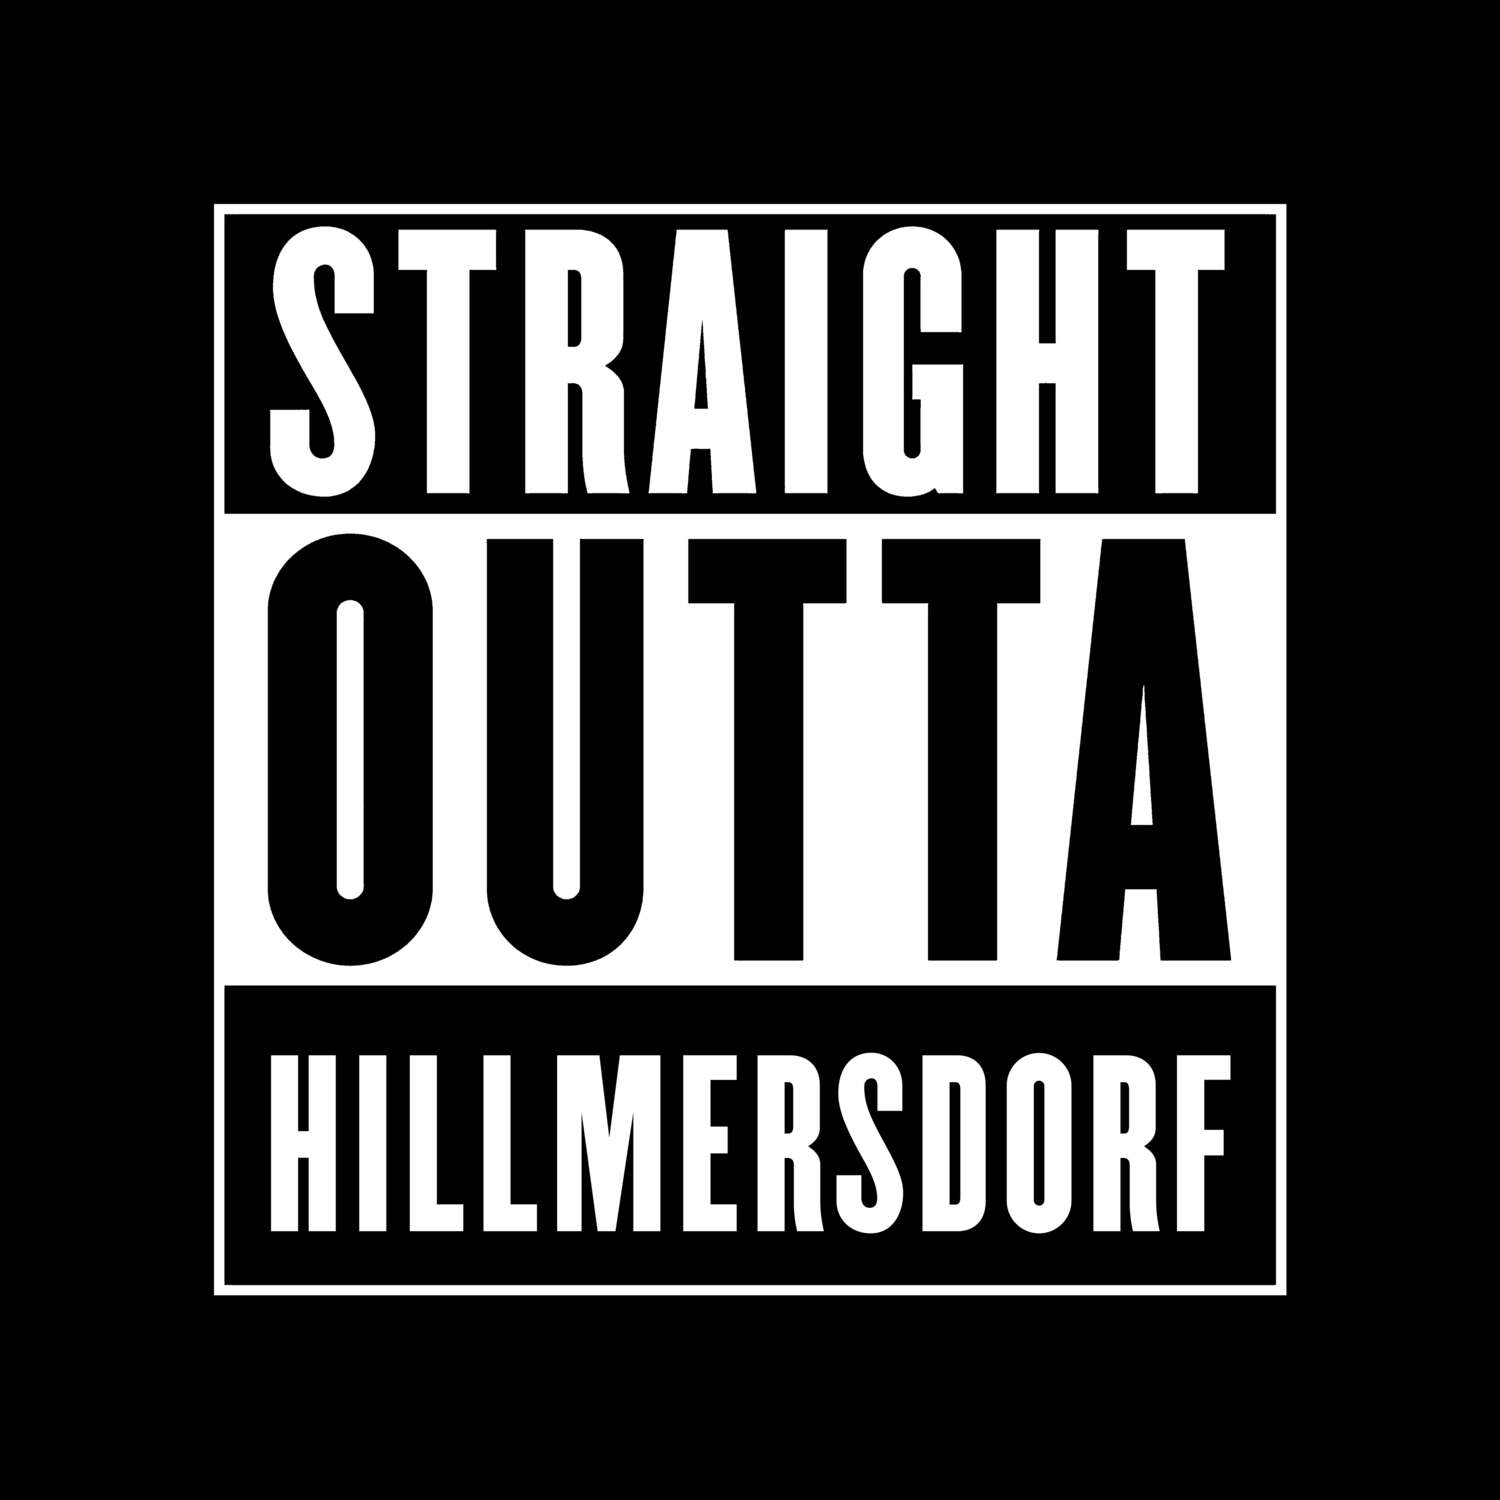 Hillmersdorf T-Shirt »Straight Outta«